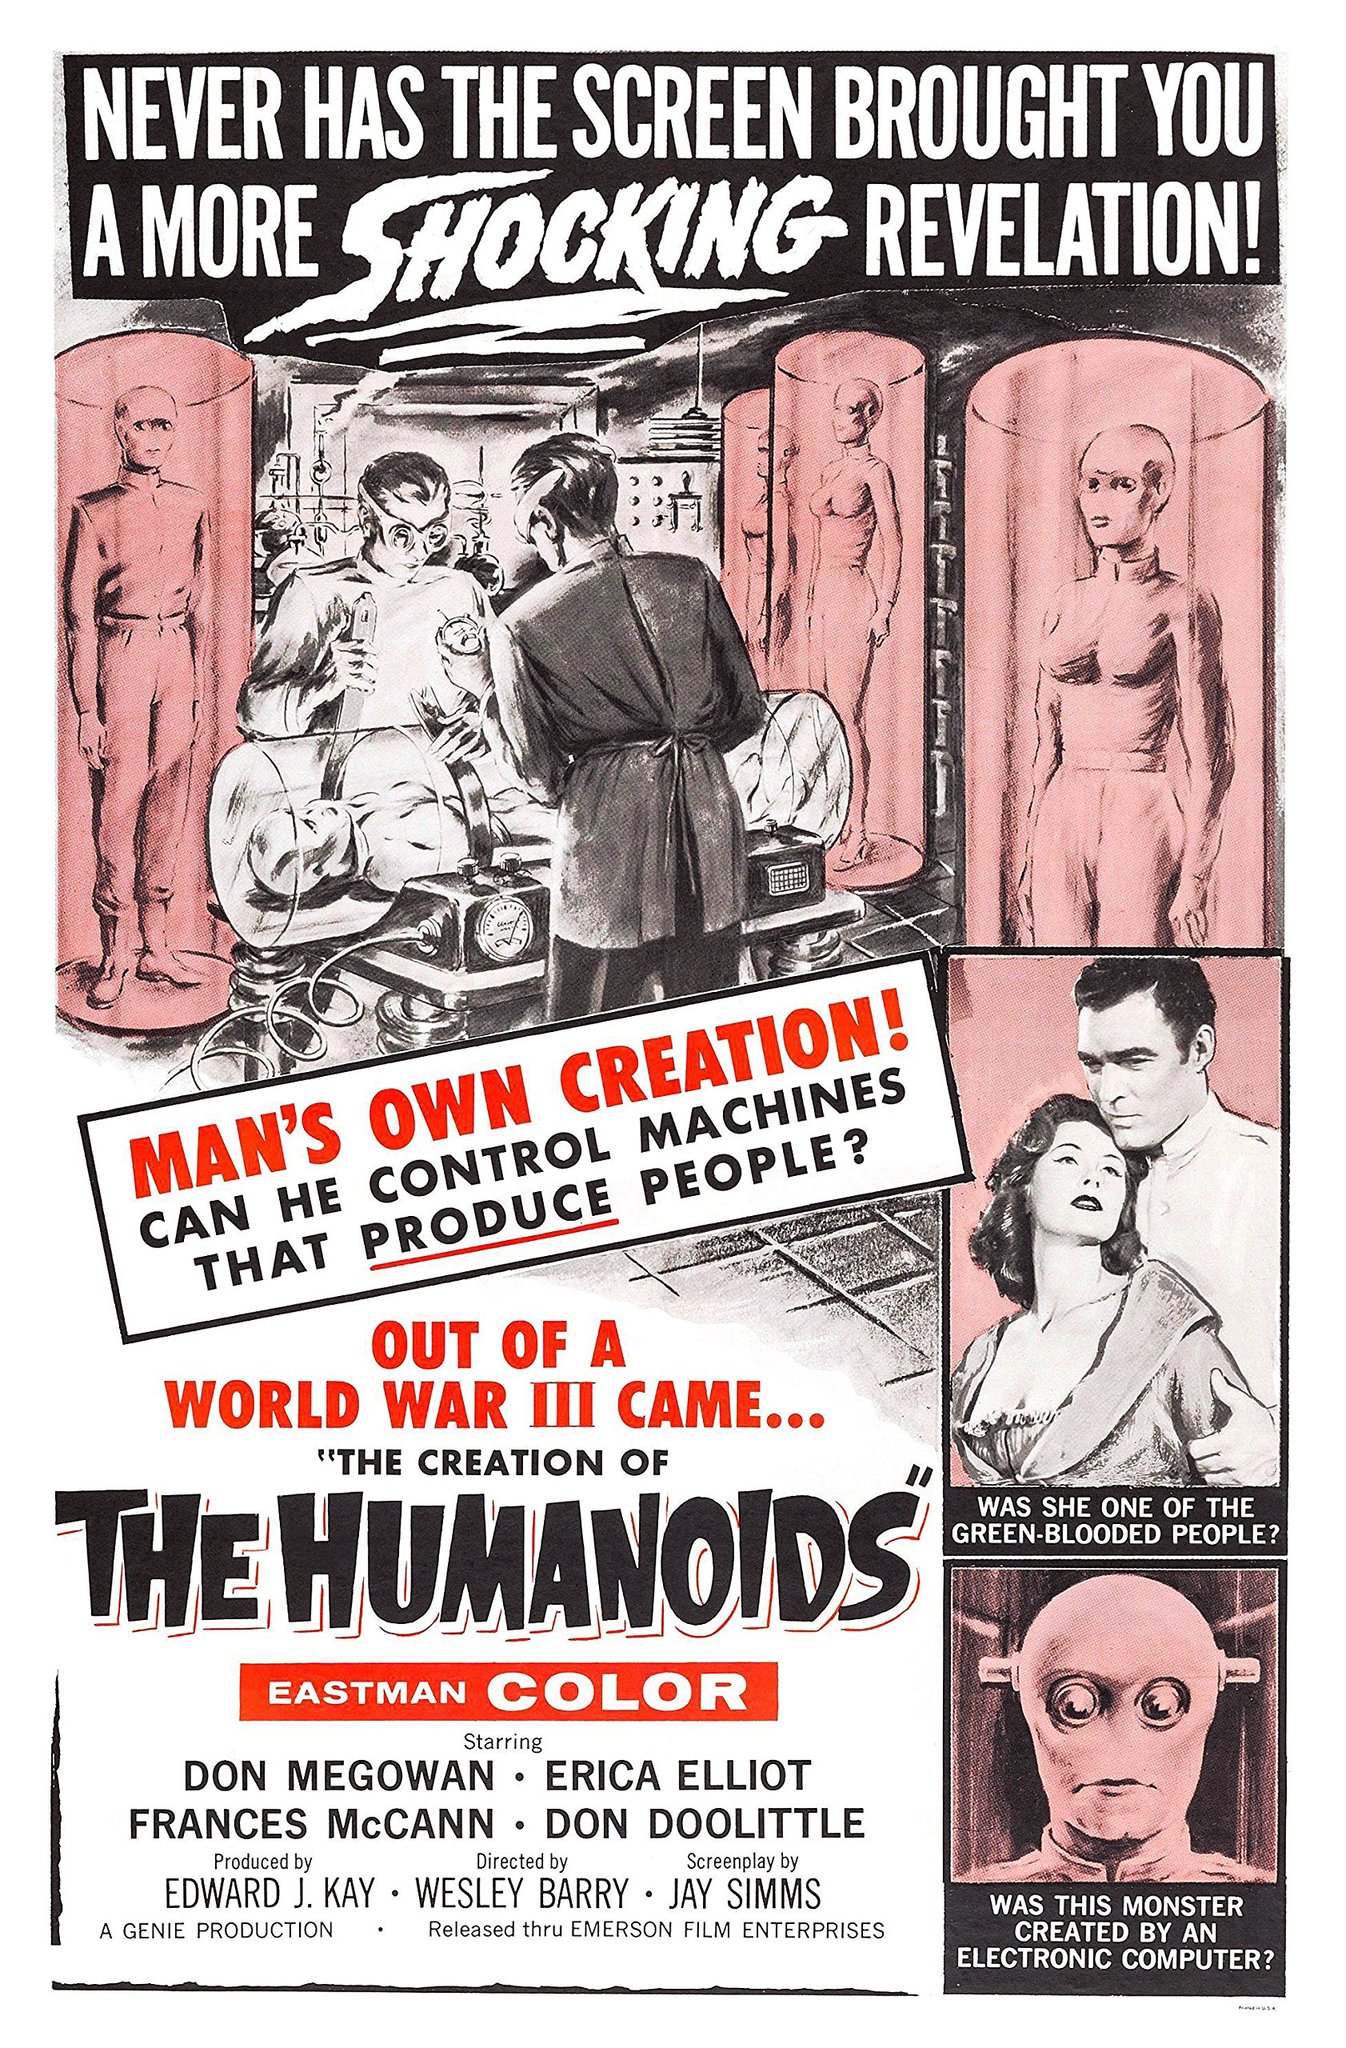 The Creation of the Humanoids (1962) Screenshot 1 